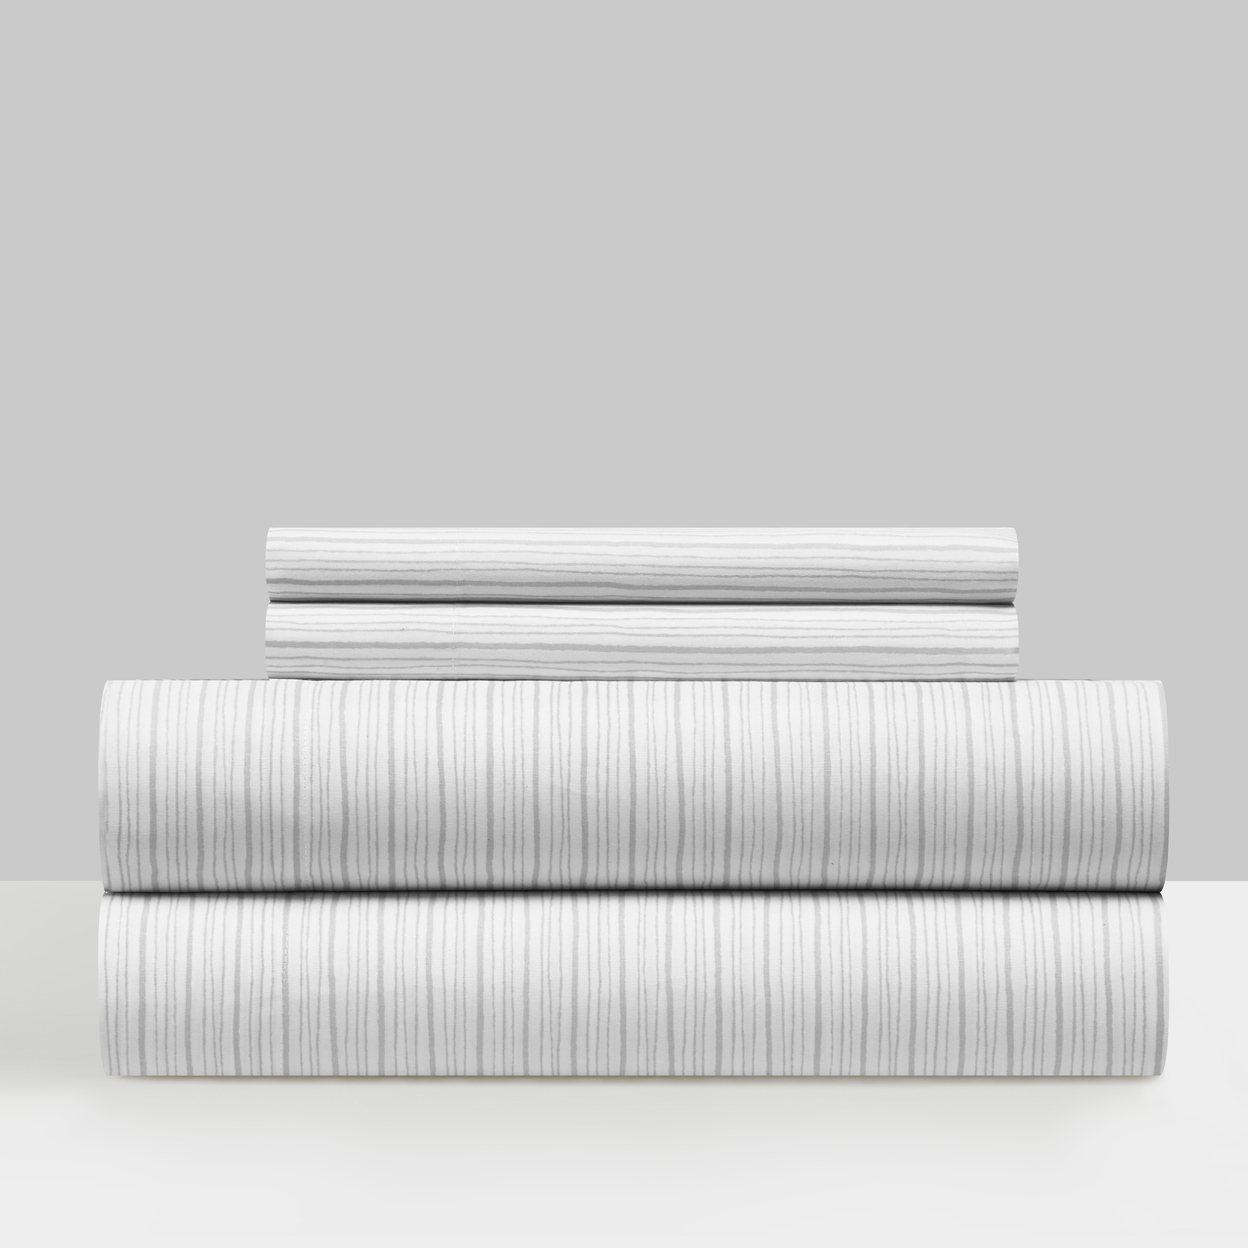 3 Or 4 Piece Silky Soft Brushed Microfiber Sheet Set - Samara Grey, King